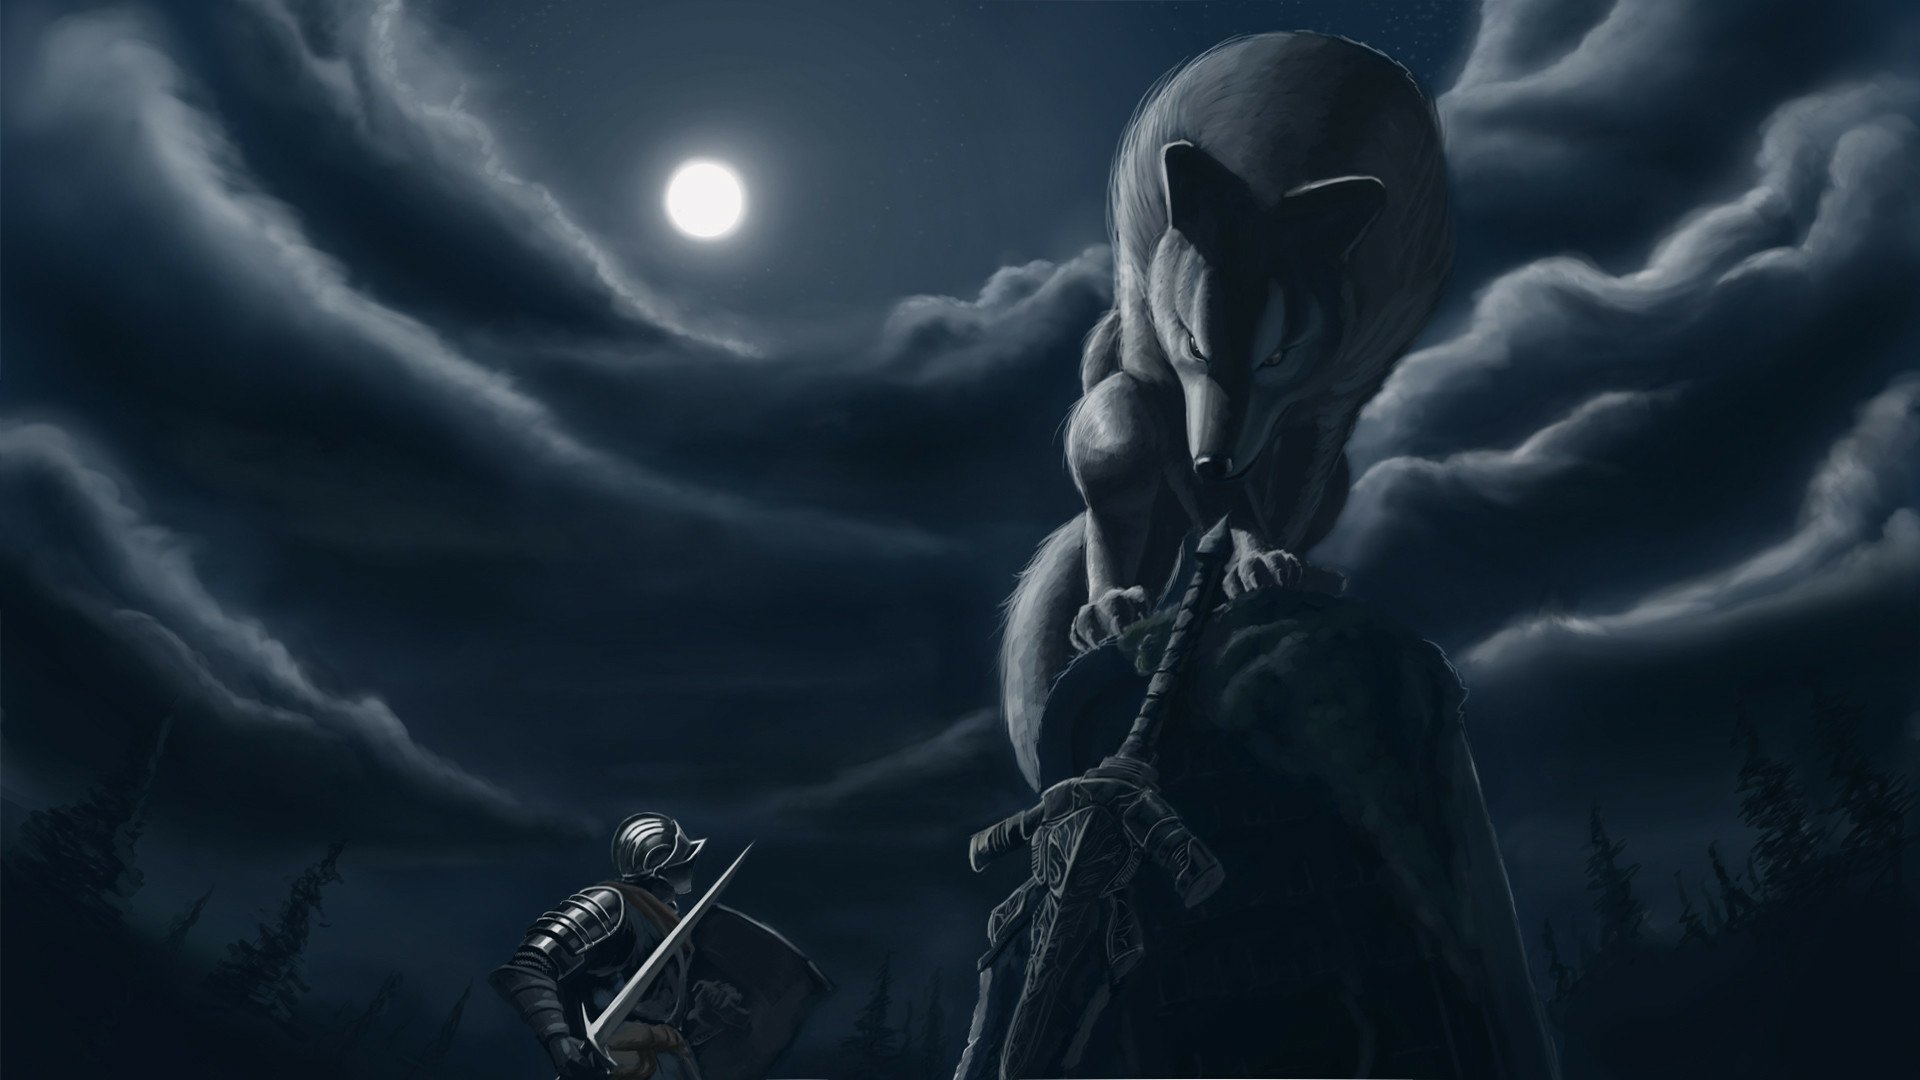 Dark Souls Full HD Wallpaper and Background Image | 1920x1080 | ID:508359